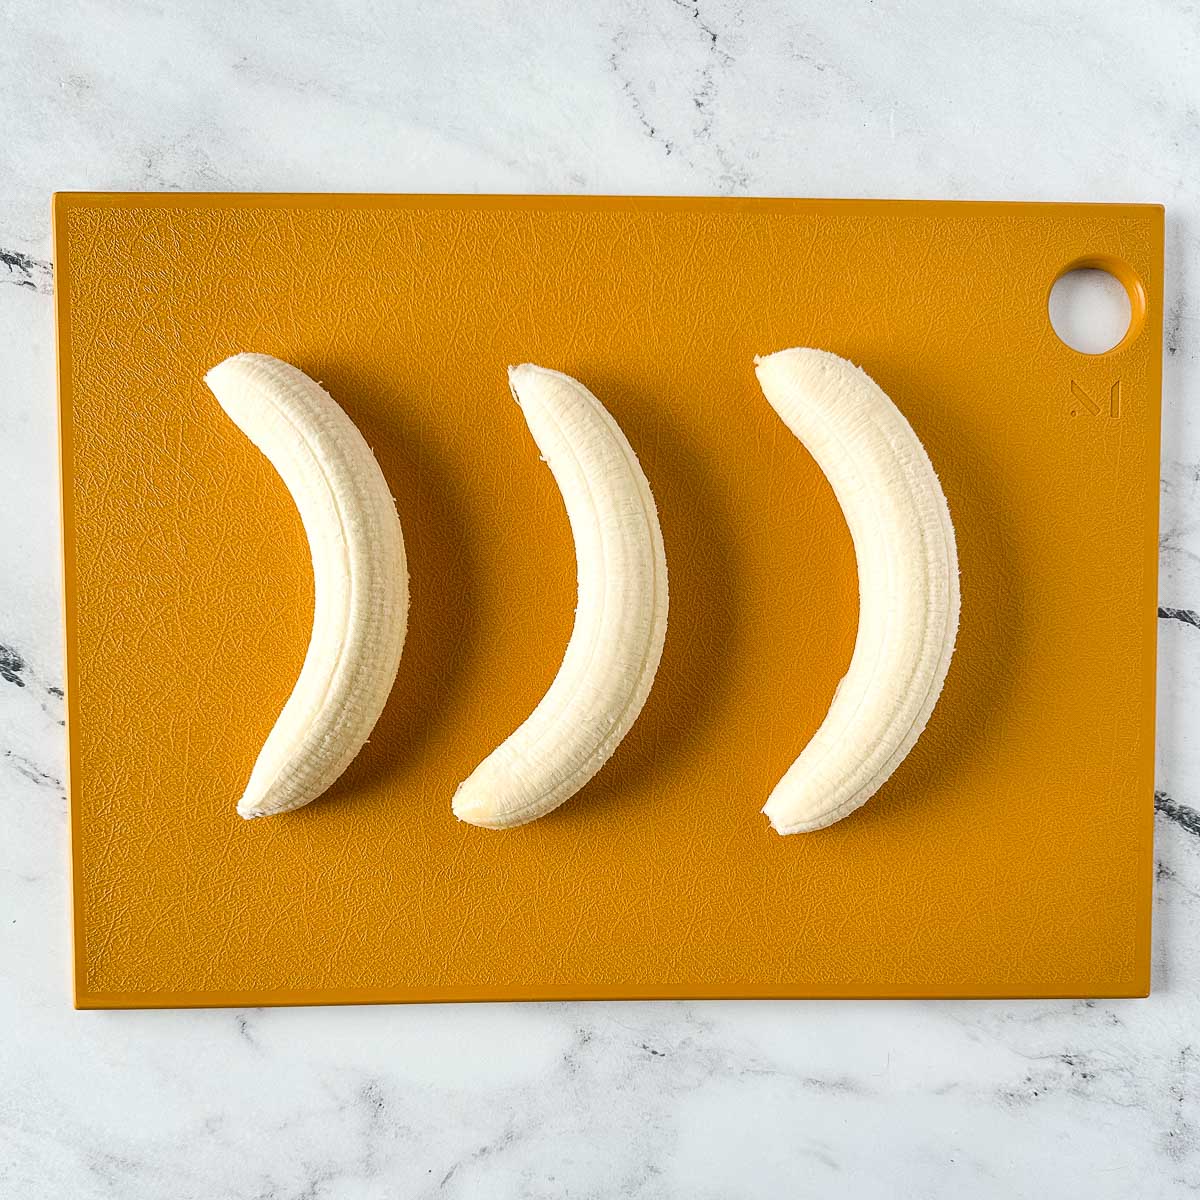 three peeled bananas on a yellow cutting board.